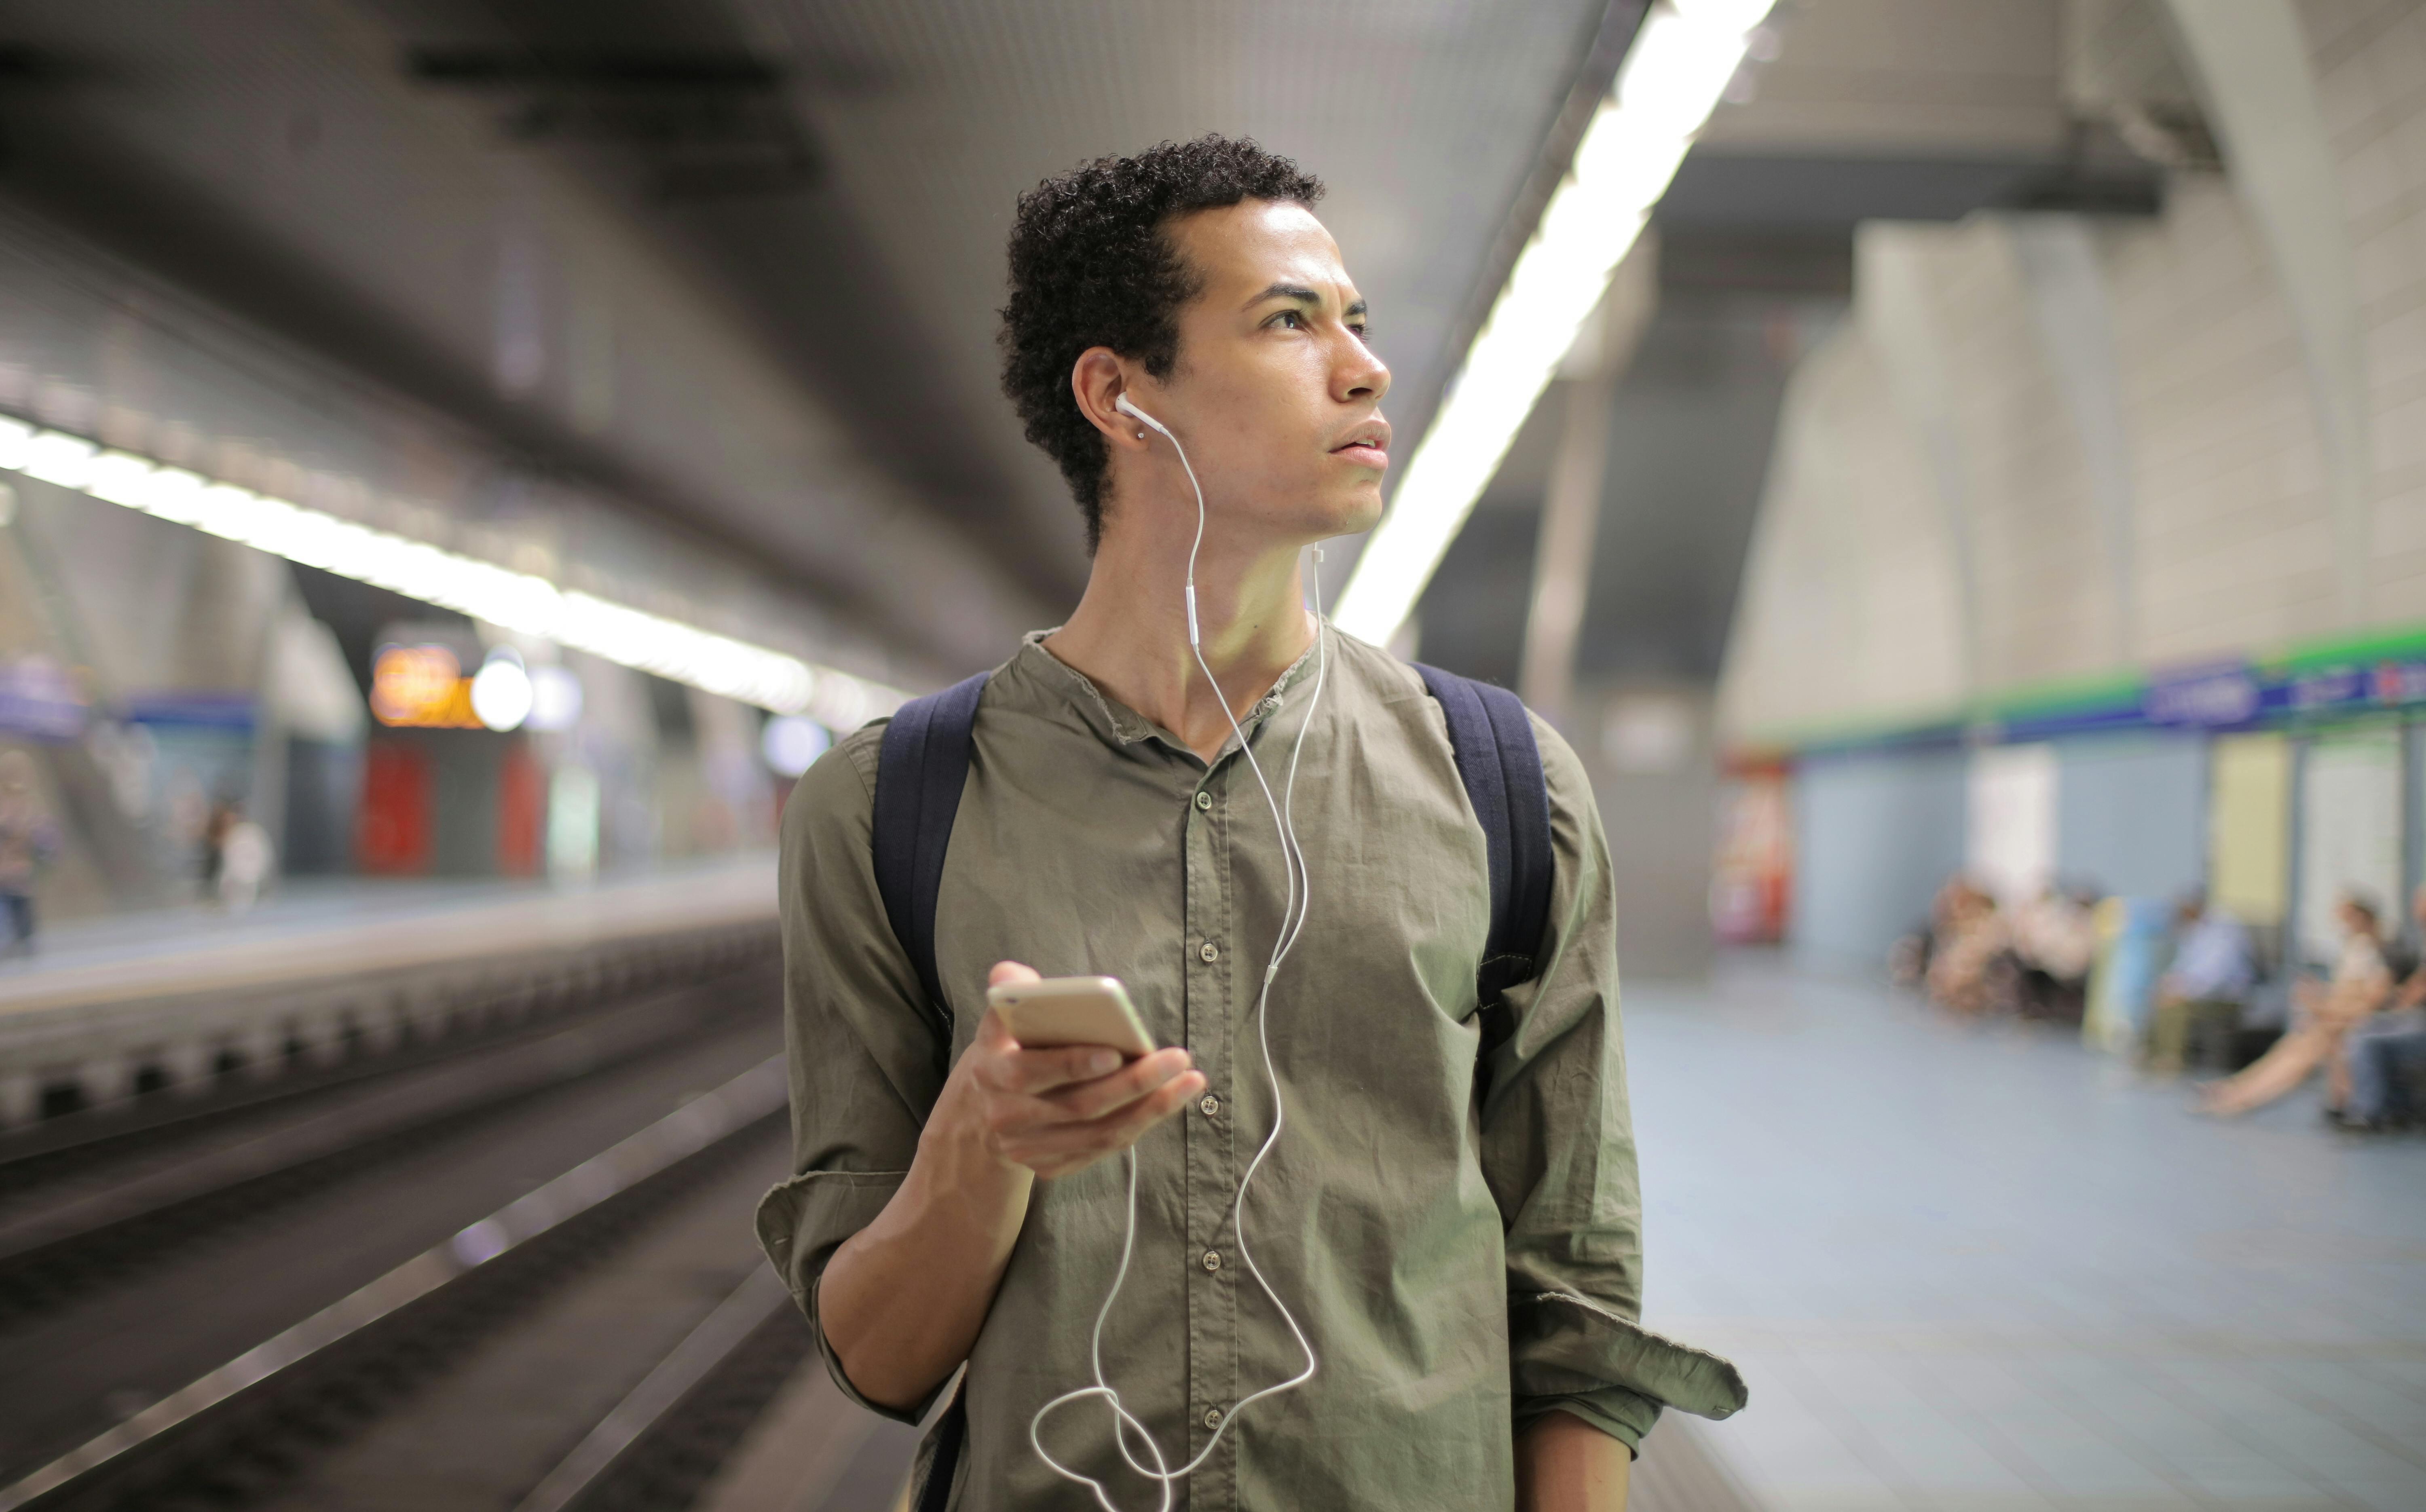 A man standing in a train station, wearing earphones.